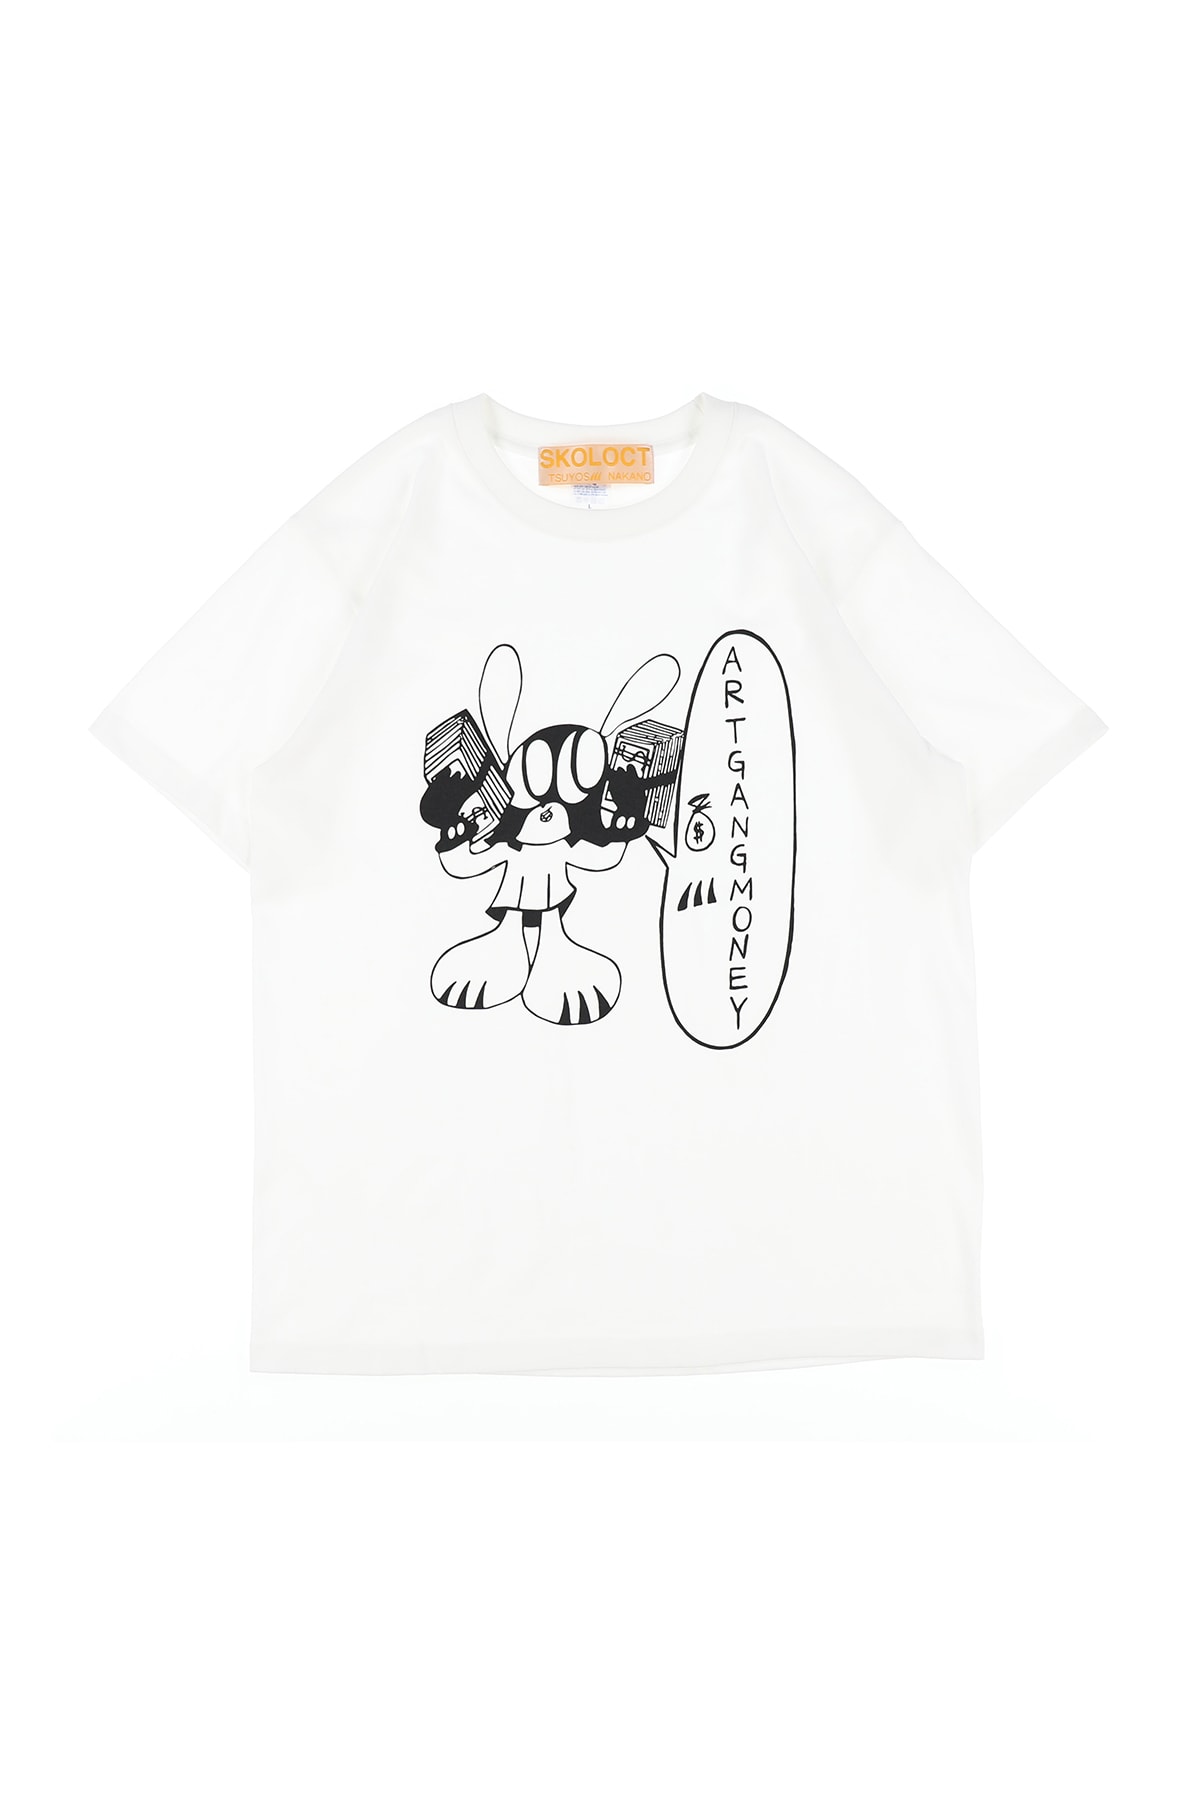 SKOLOCT EMPTY R _ _ M Exclusive Capsule T Shirt Overalls Art Print